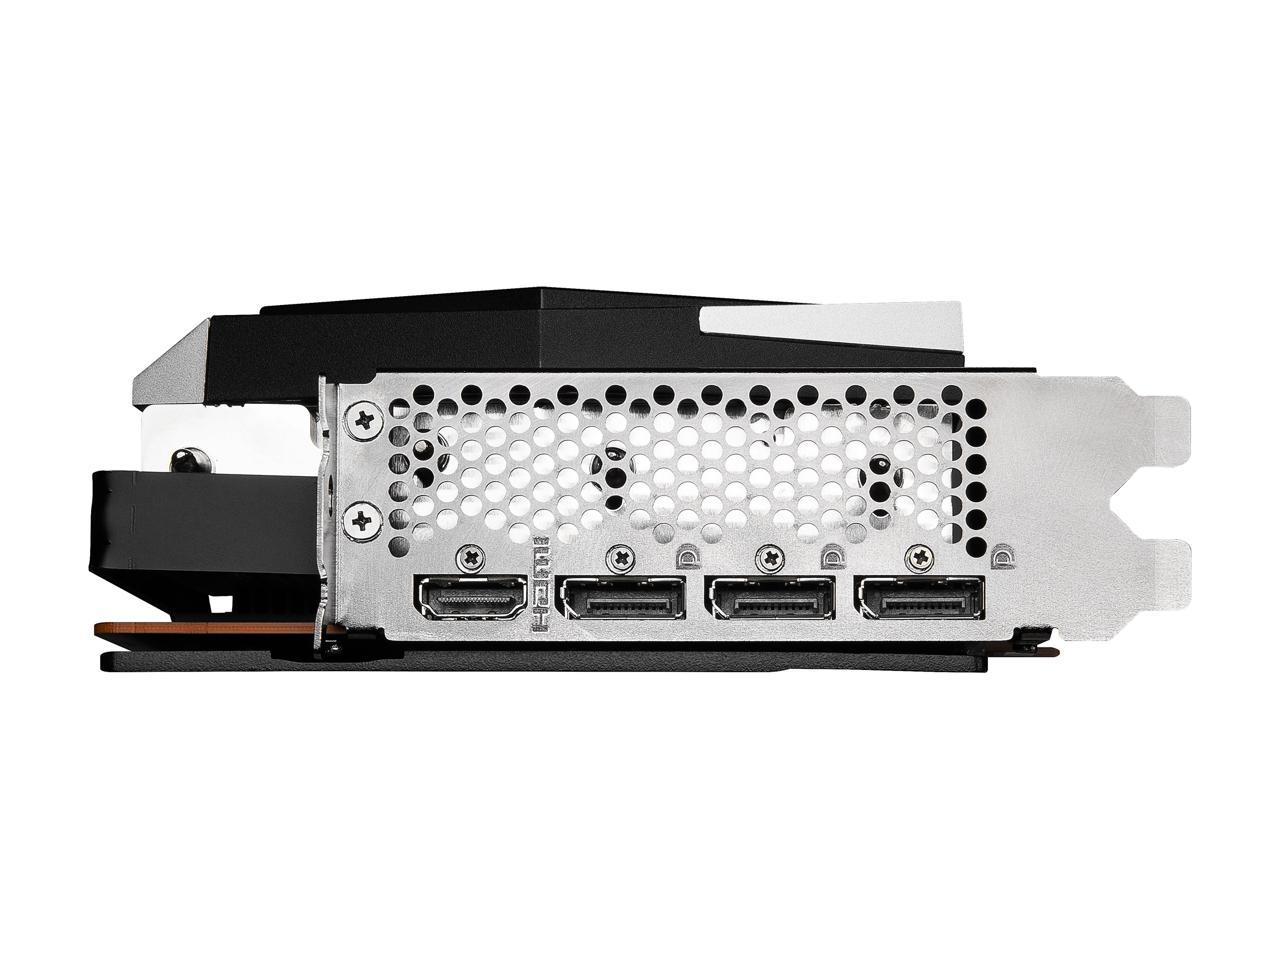 MSI Gaming Radeon RX 6800 16GB GDDR6 PCI Express 4.0 CrossFireX Support Video Card RX 6800 GAMING X TRIO 16G